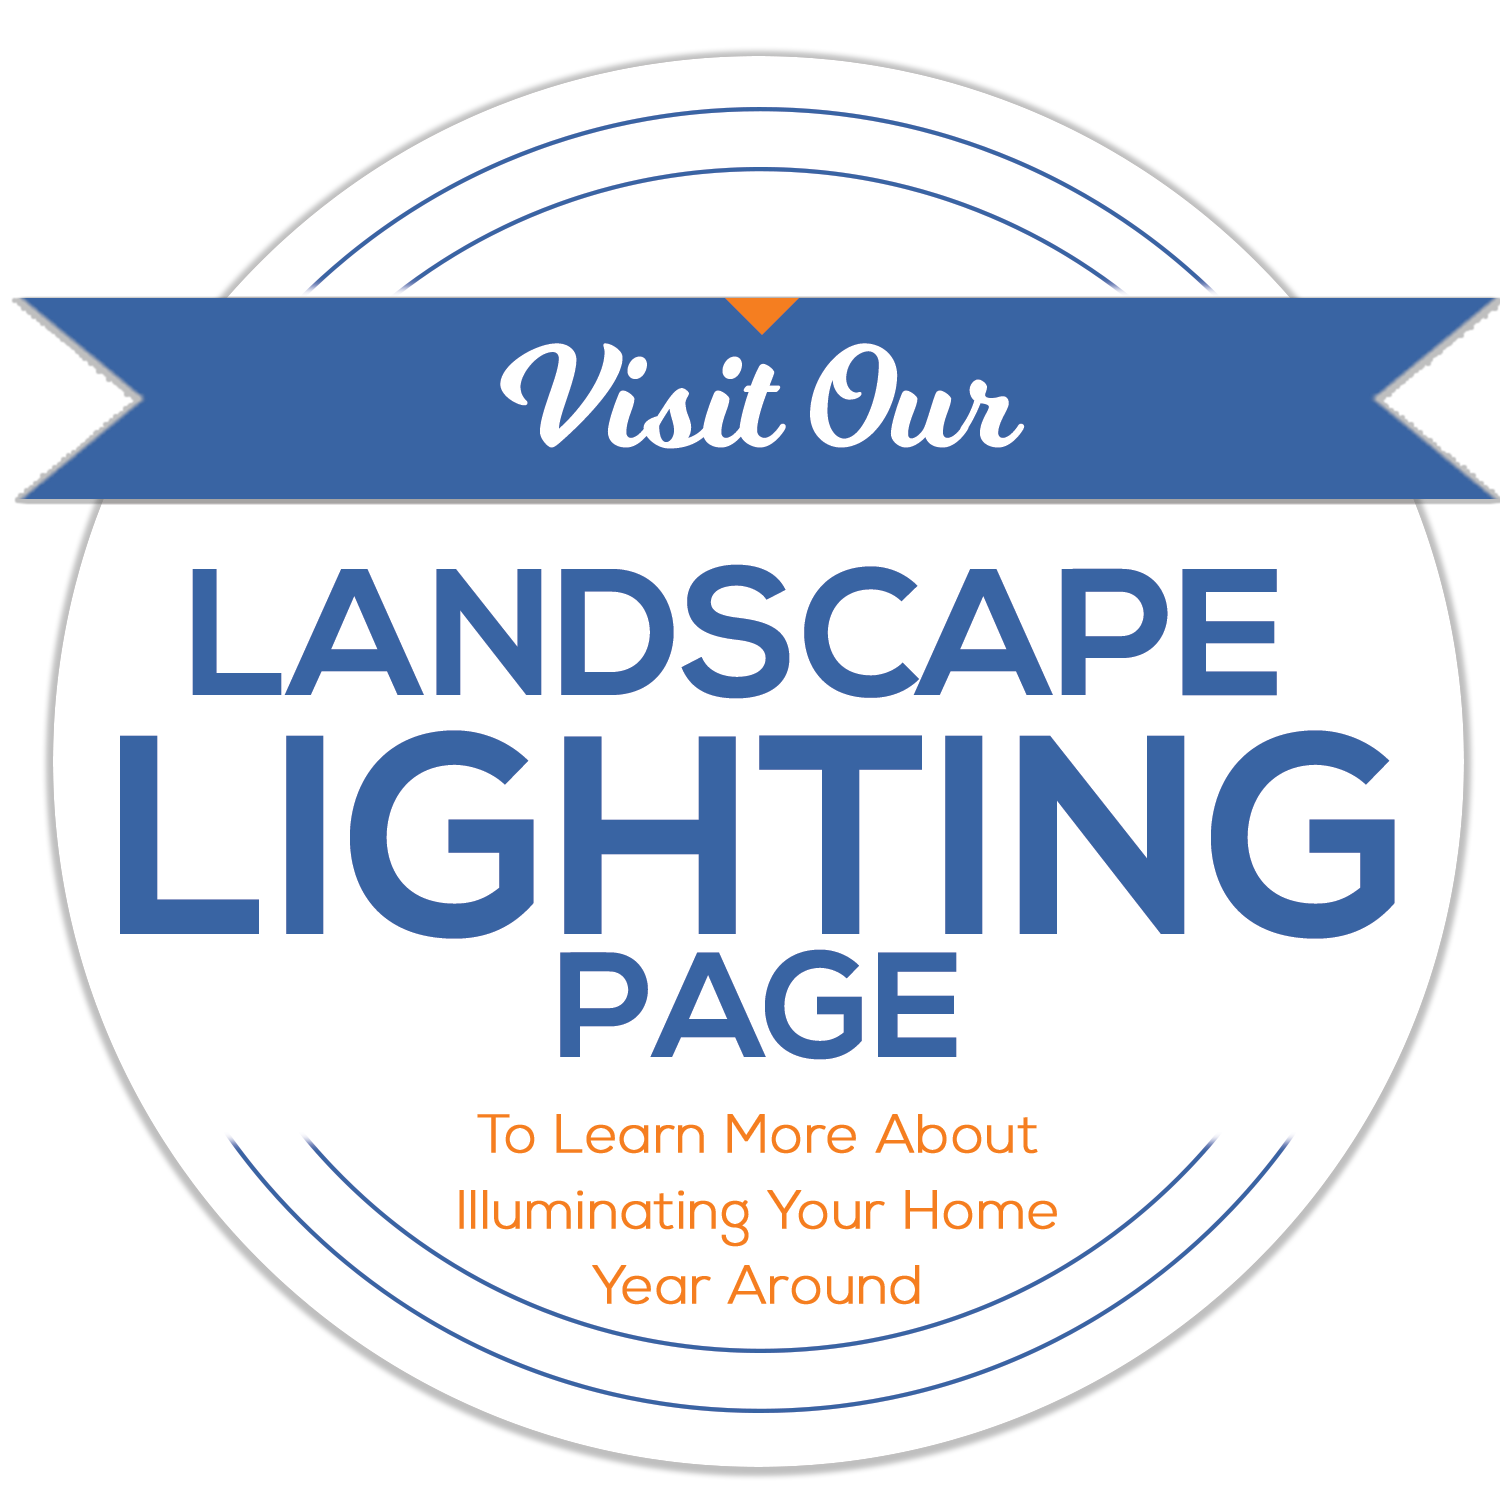 Visit our Landscape Lighting page!